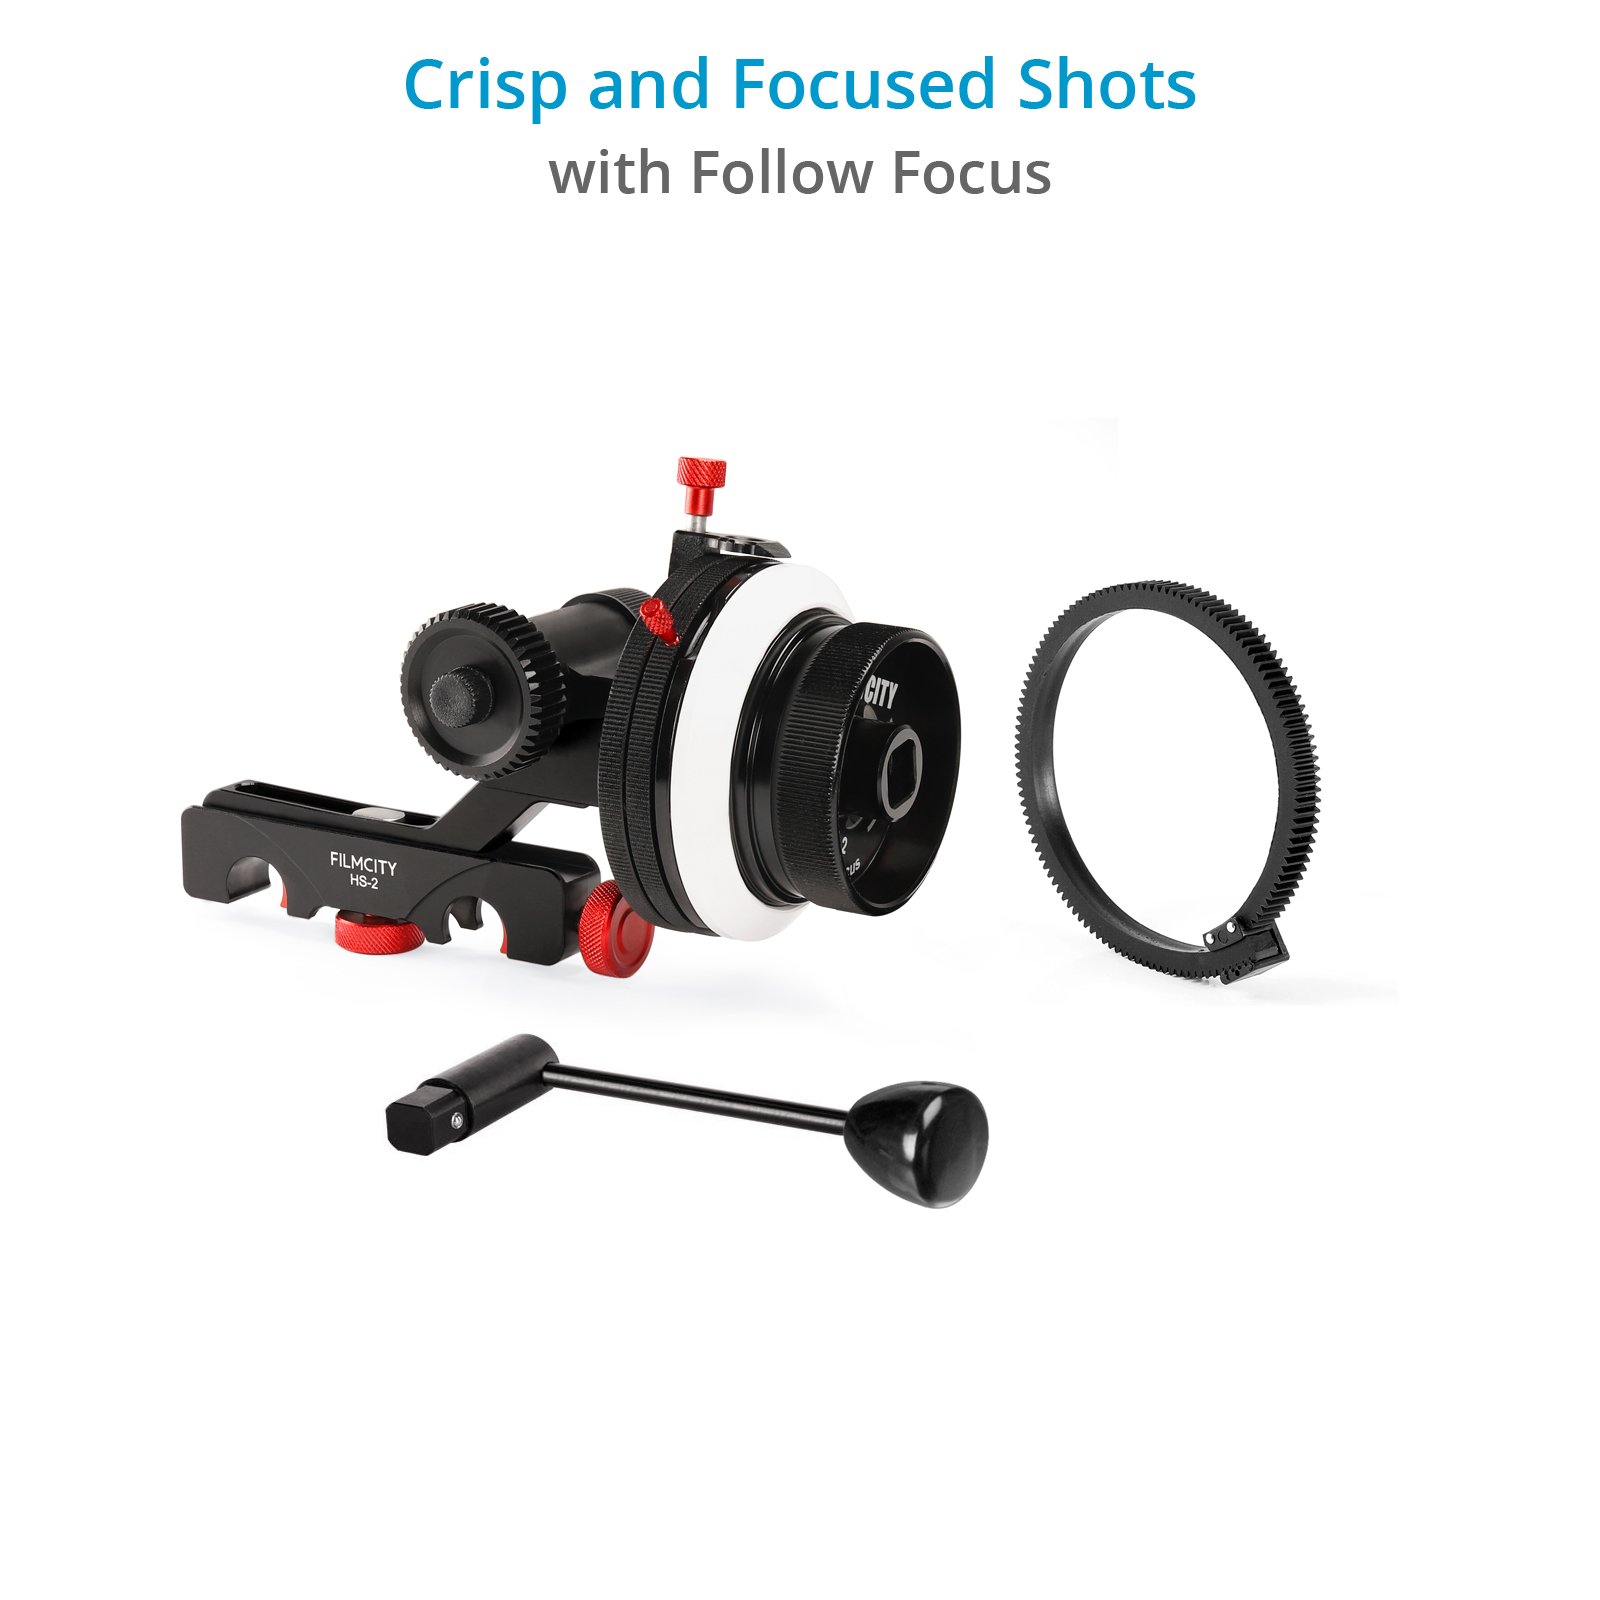 FILMCITY FC-03 Shoulder Rig Kit with Matte Box & Follow Focus for DSLR Cameras ชุดริกกล้อง DSLR พร้อมด้ามจับคู่ แผ่นรองบ่า Matte Box MB-600 Follow Focus HS-2 ราคา 13900 บาท